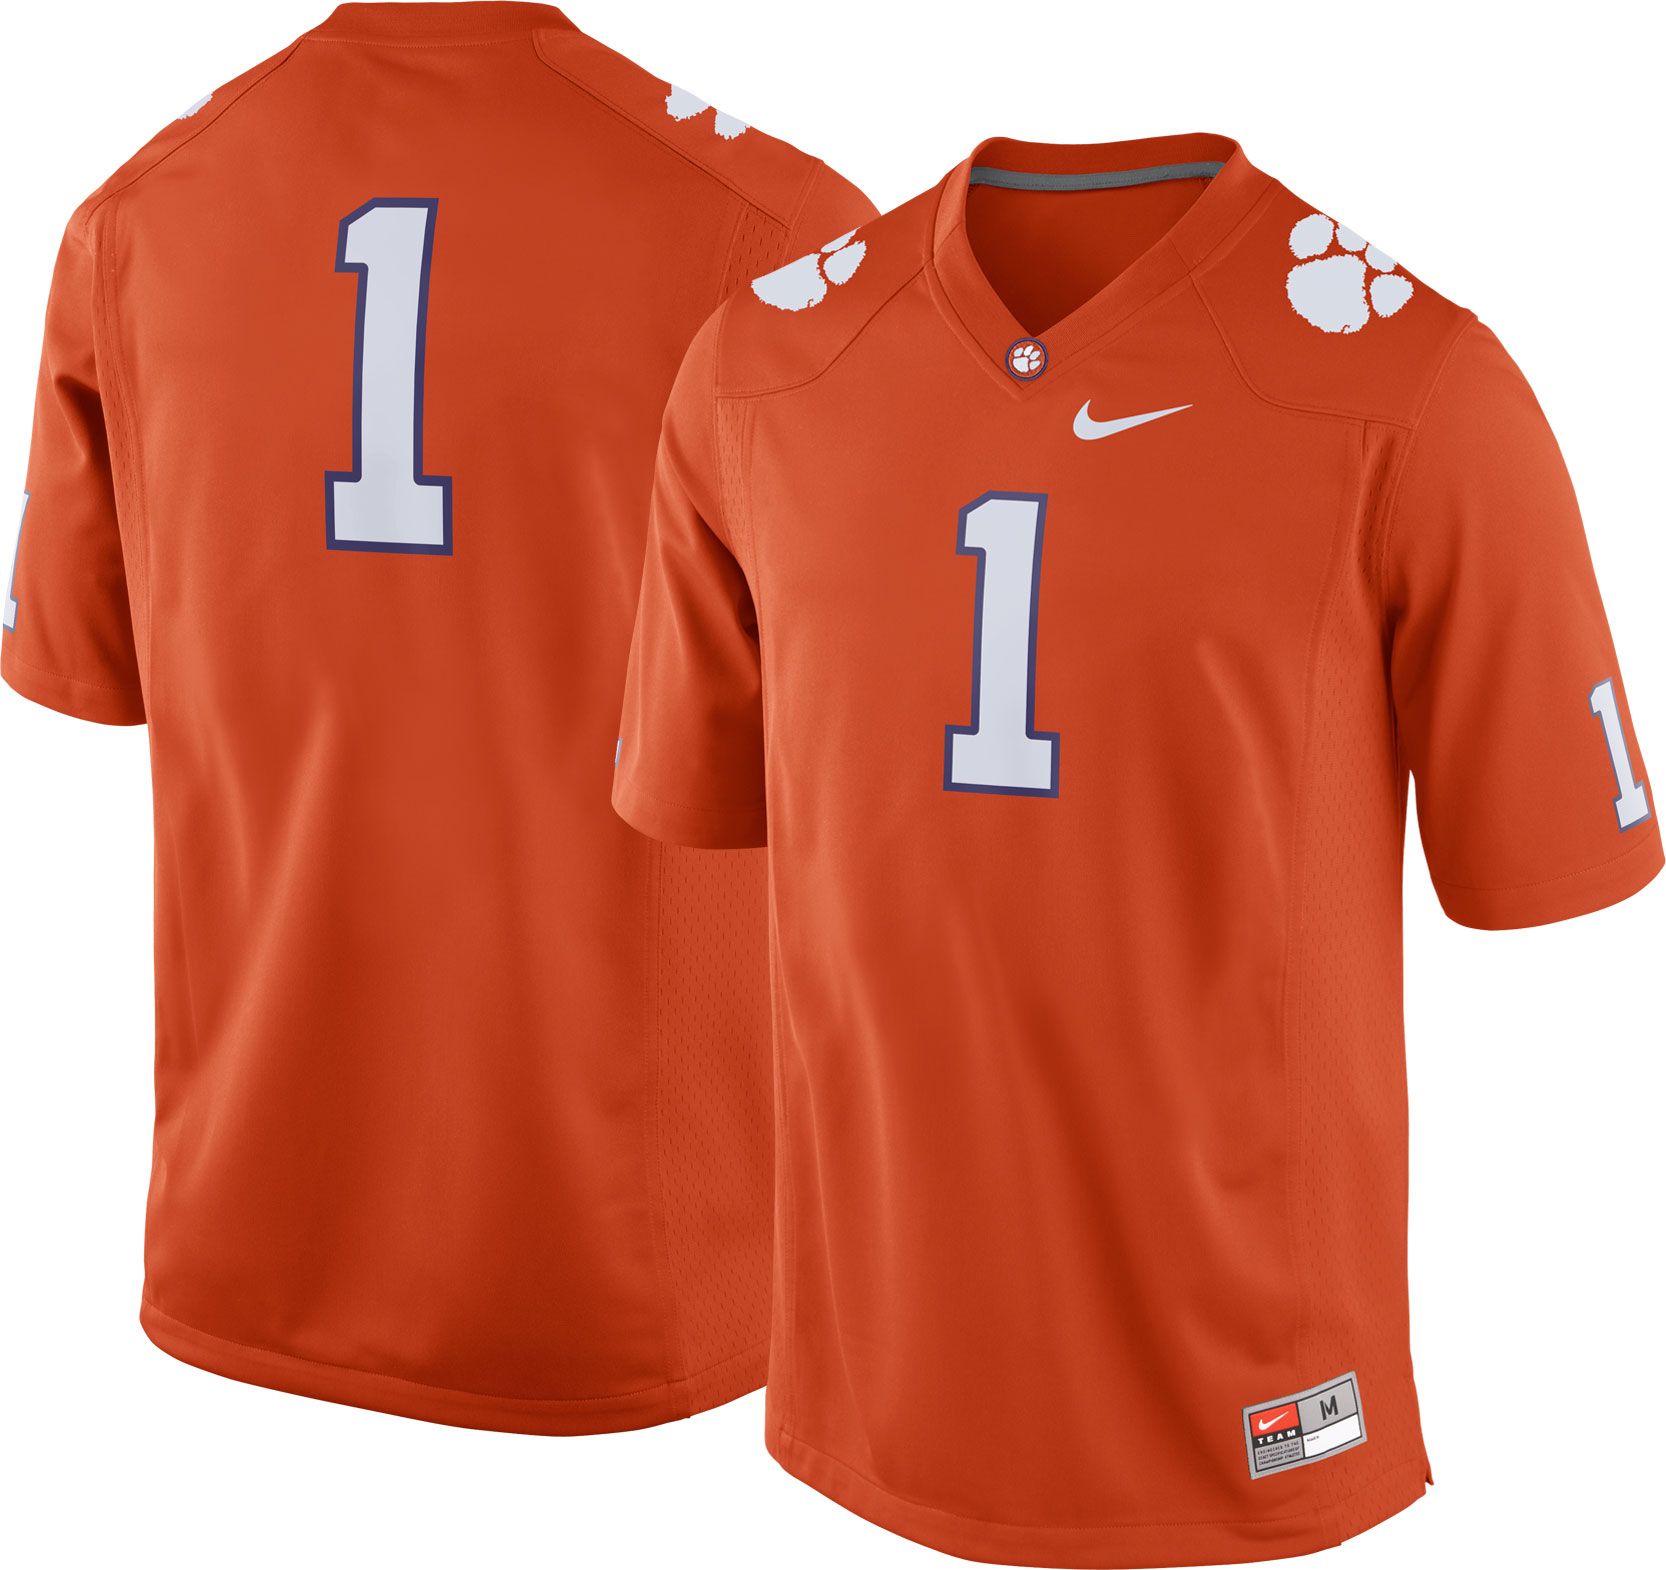 Nike Men's Clemson Tigers #1 Orange 